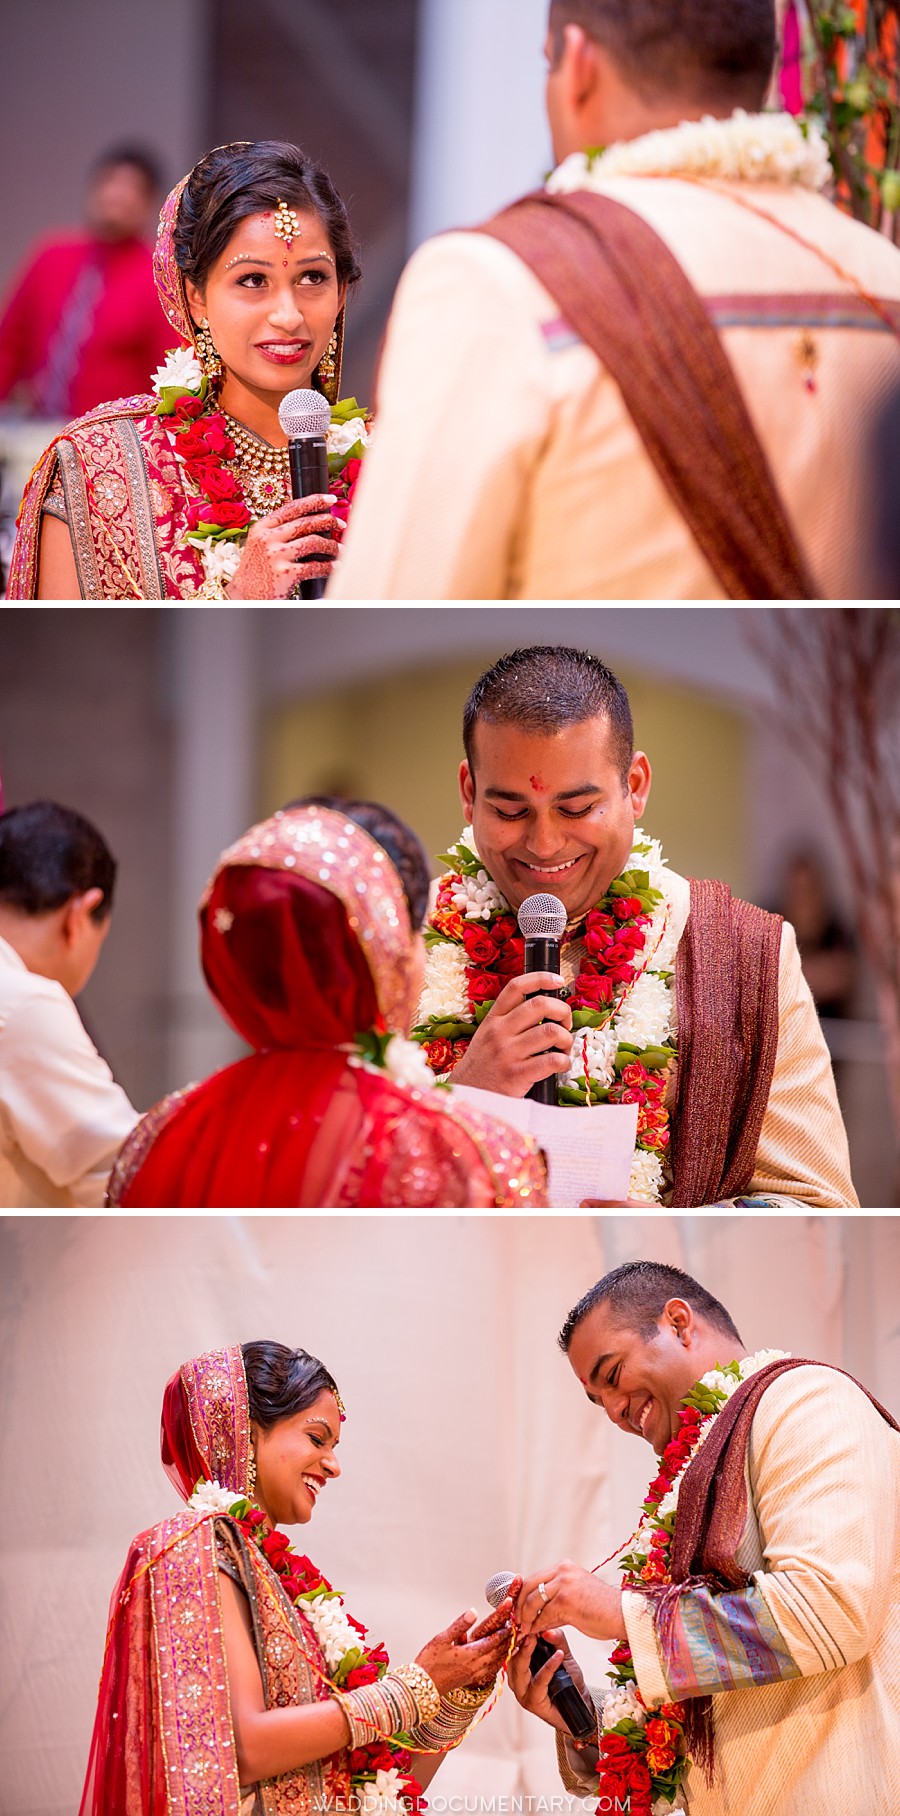 San_Francisco_Indian_Wedding_0017.jpg